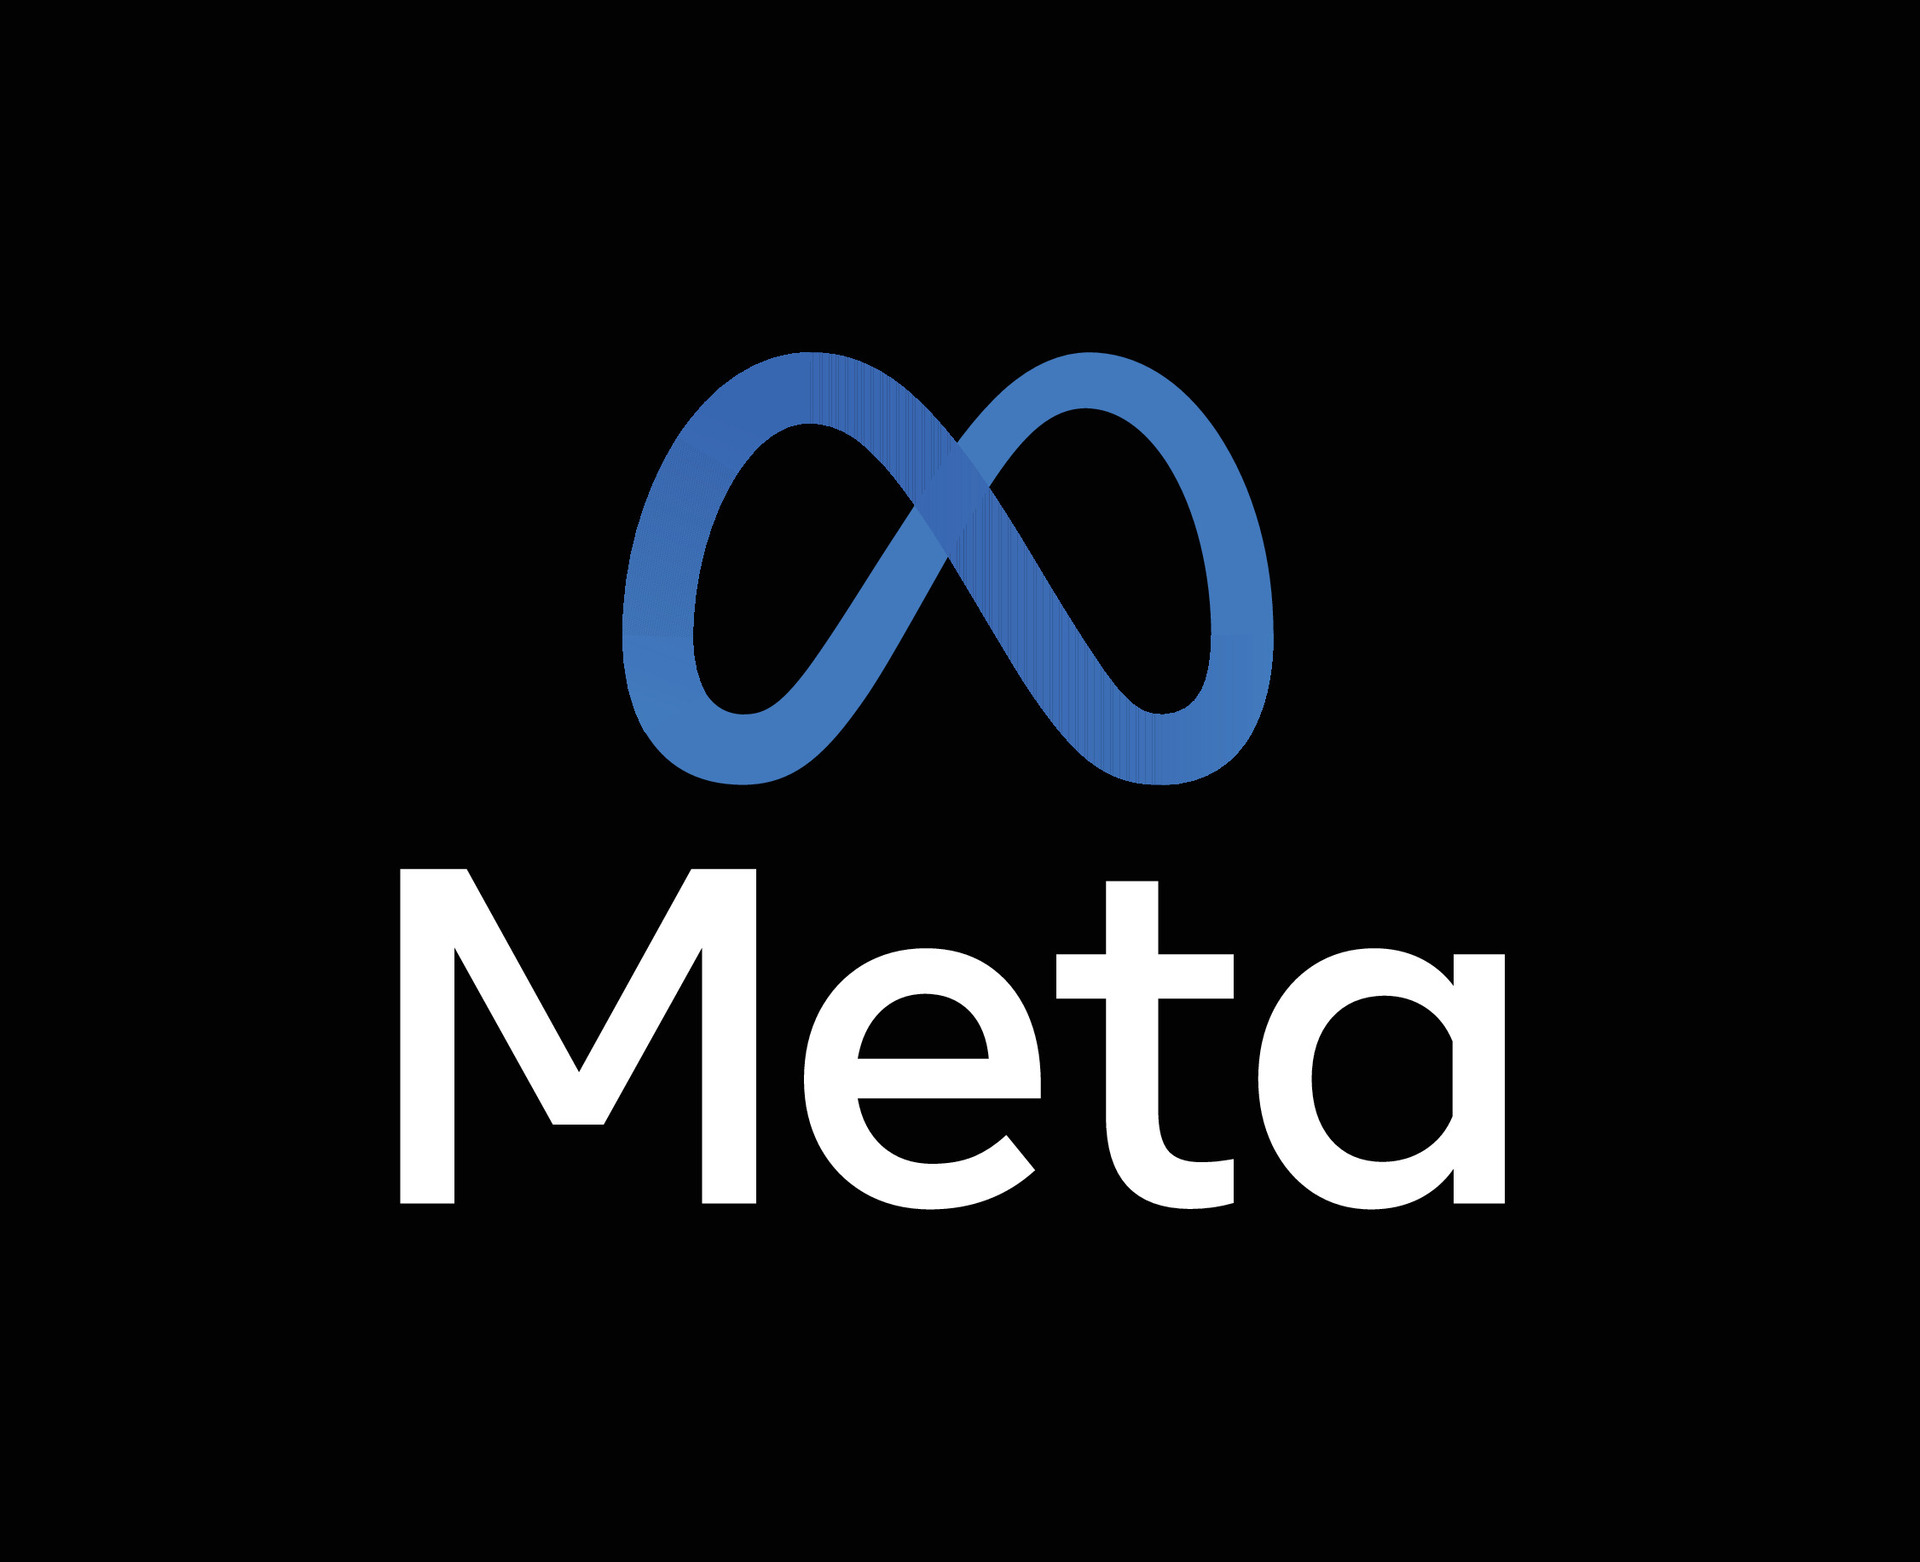 vecteezy_meta-social-media-symbol-logo-design-vector-illustration_26135319